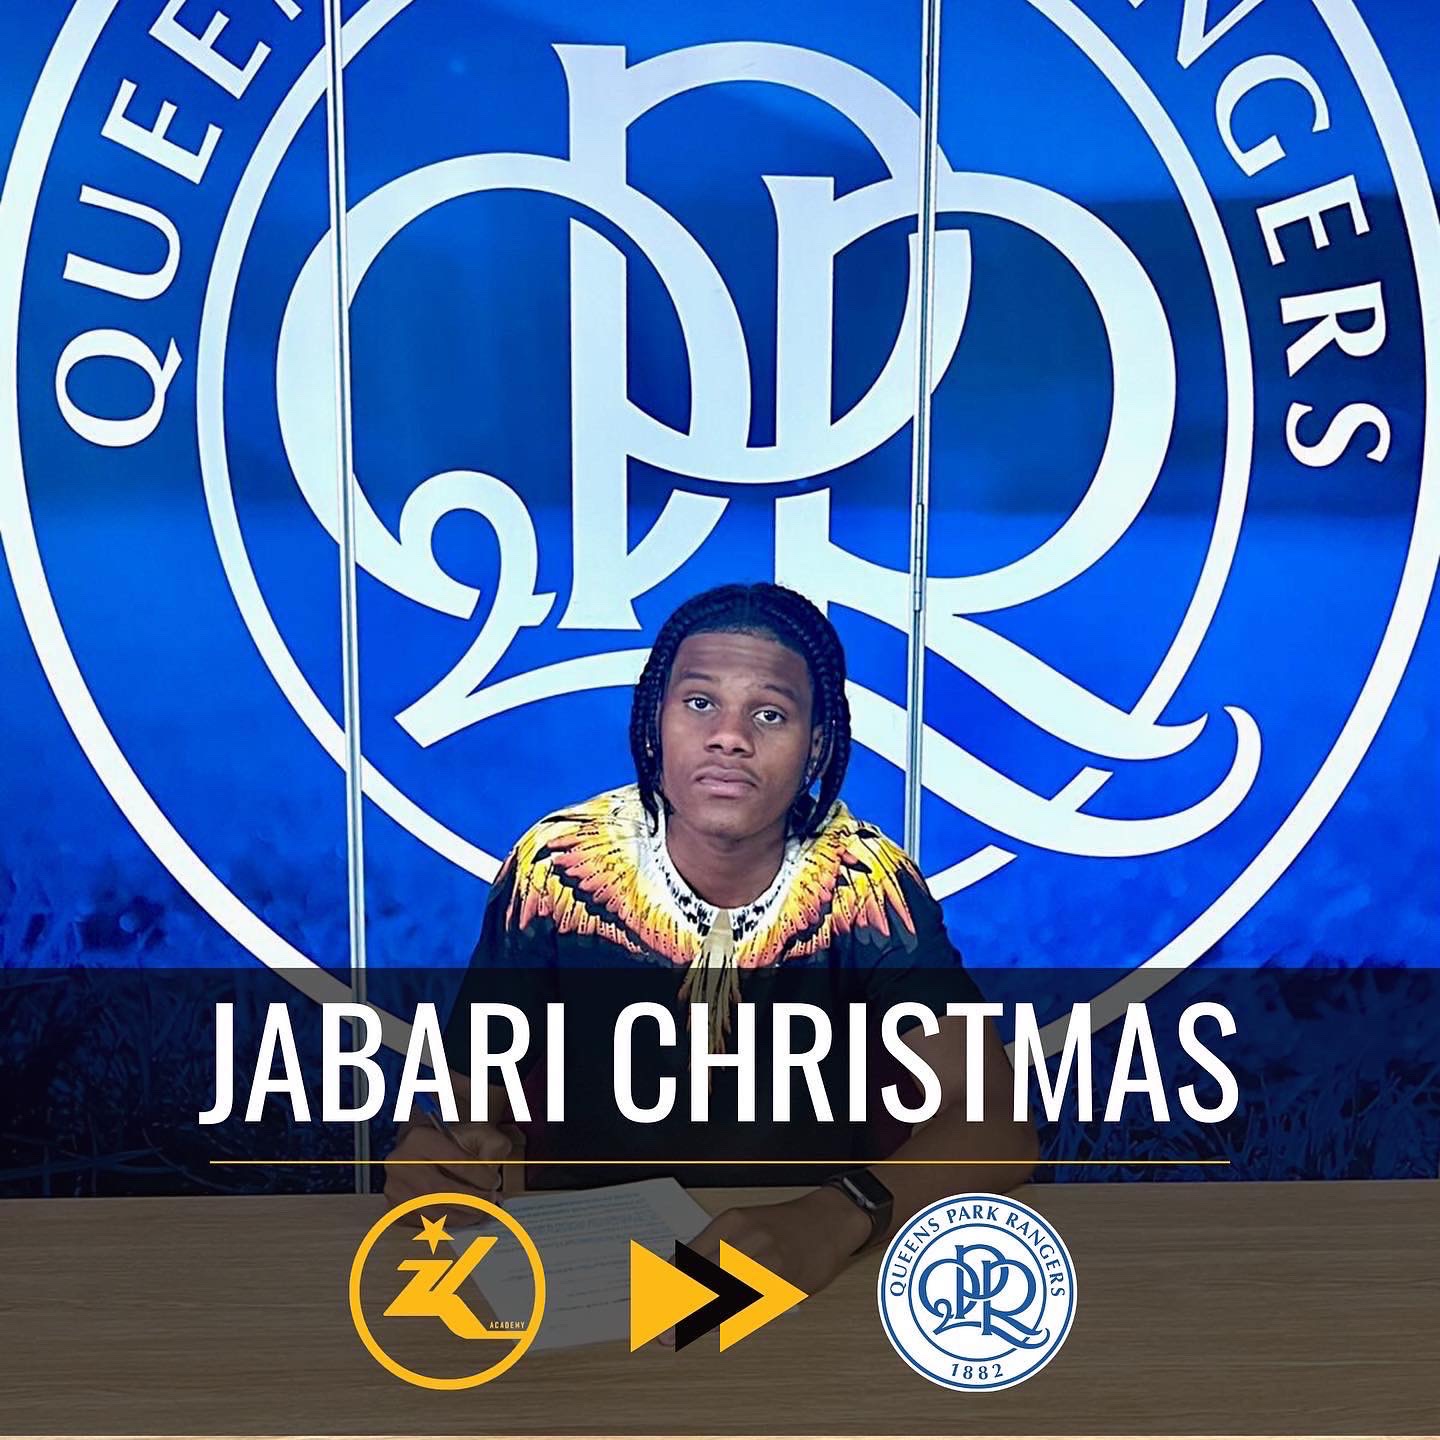 Jabari Christmas signs for QPR FC